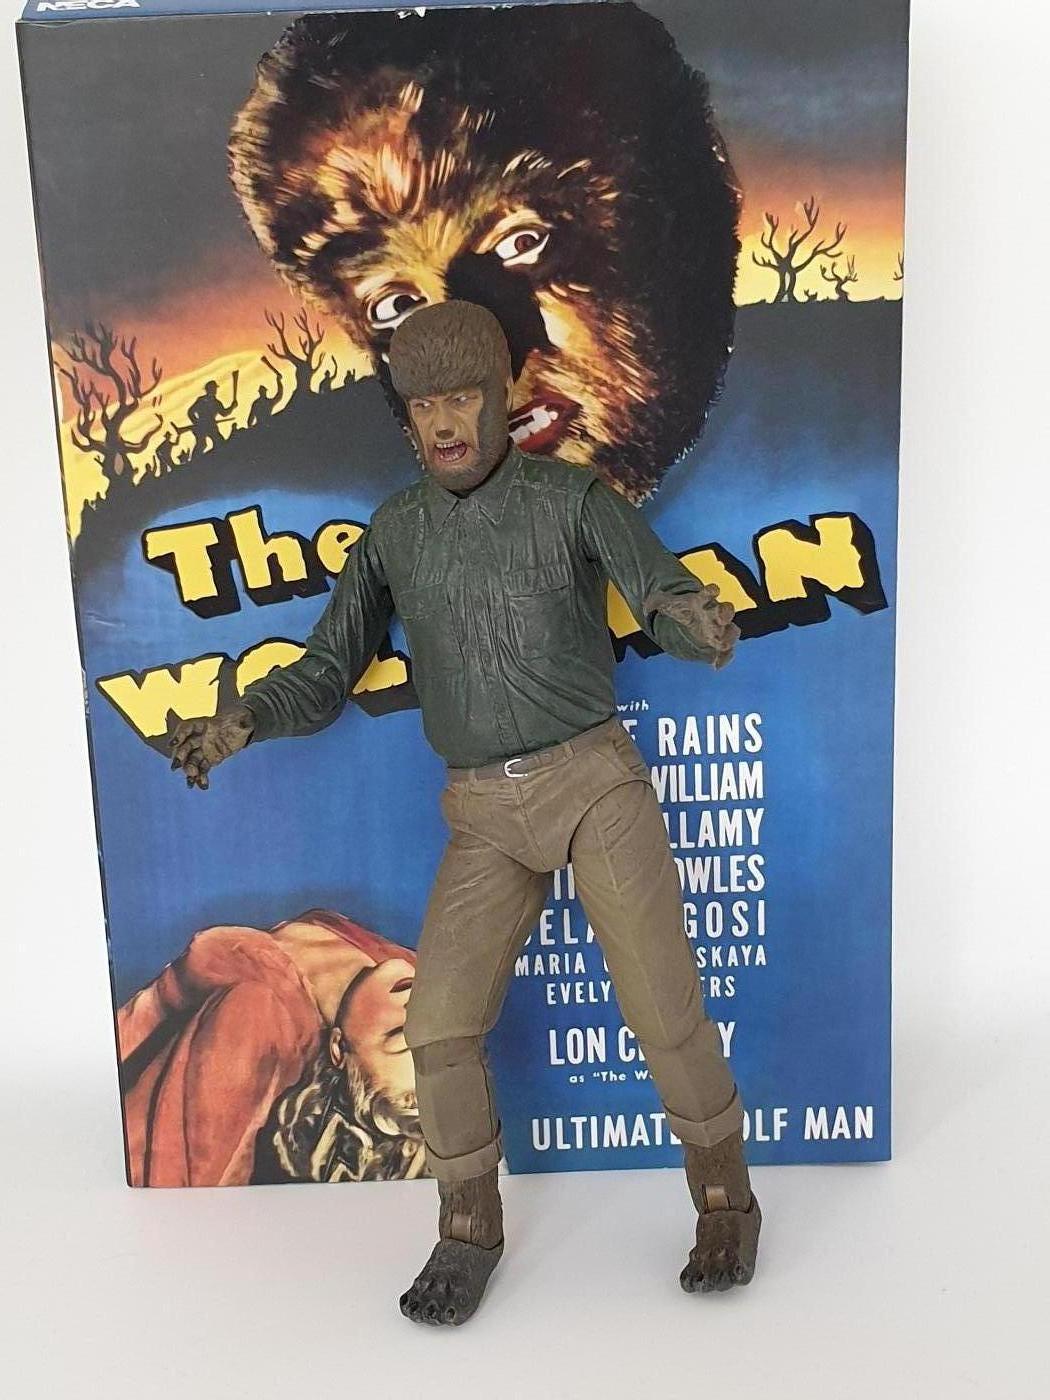 The Wolfman! Universal Monsters. Box slightly damaged.